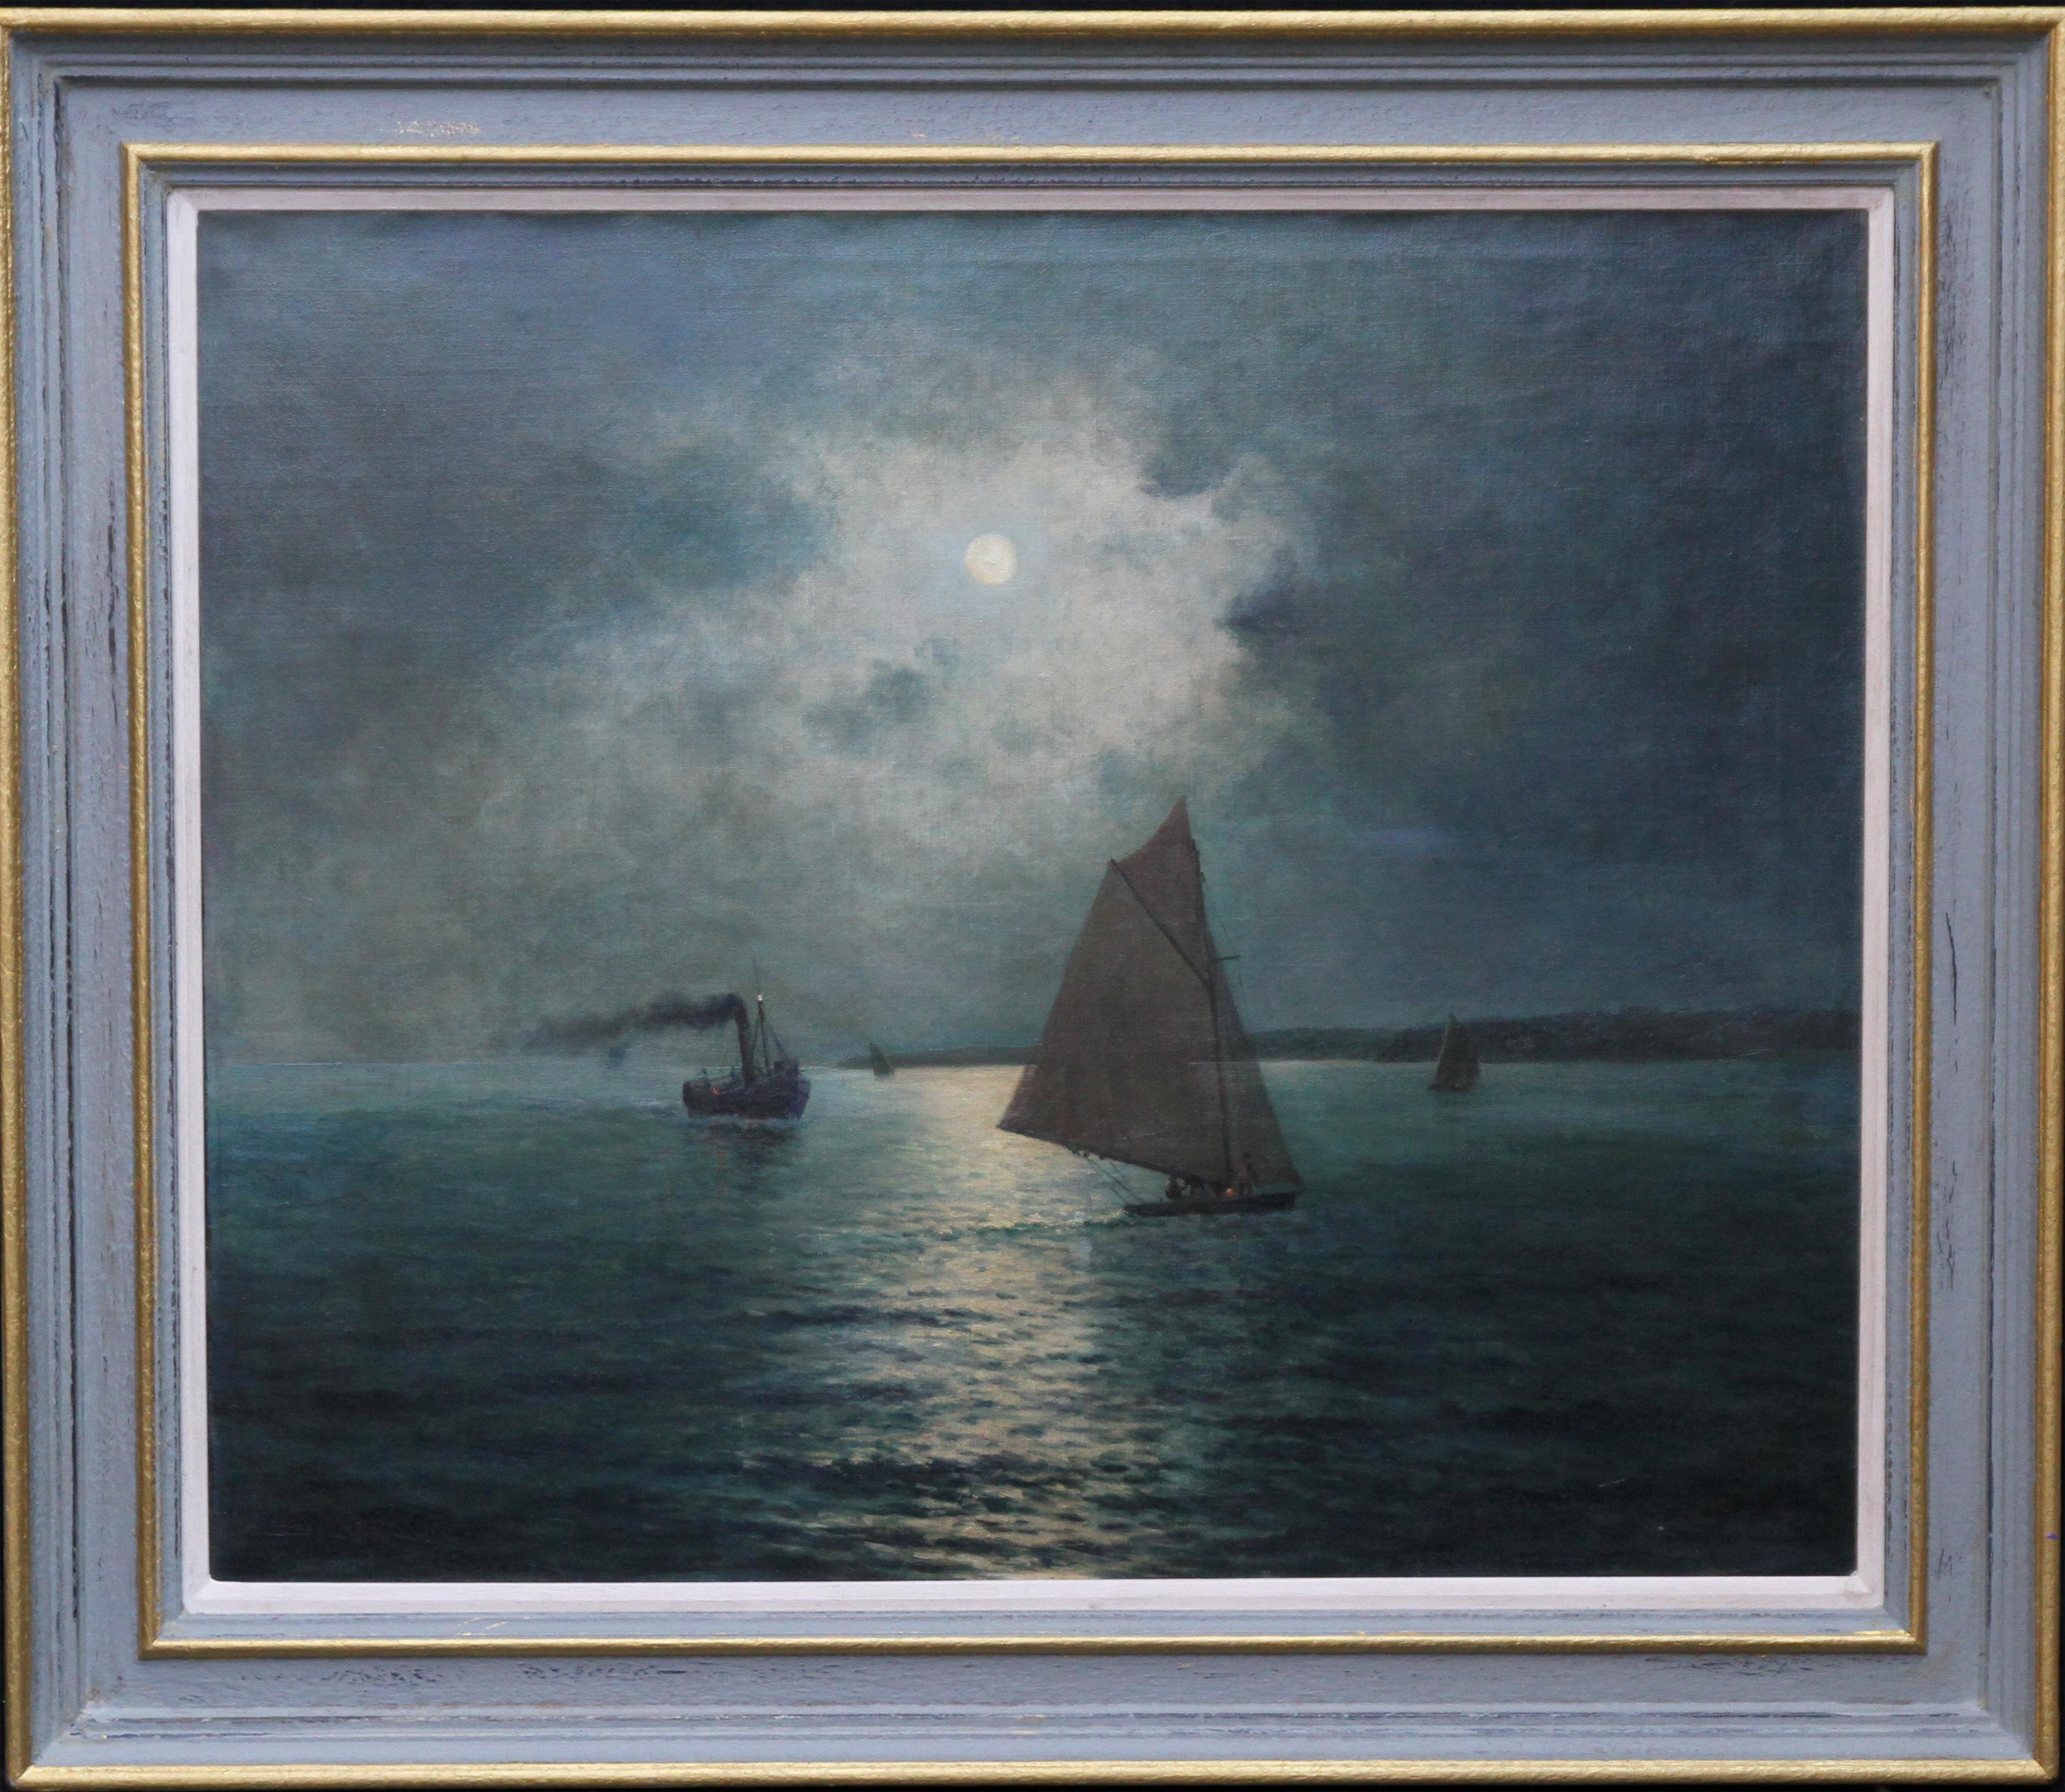 James Ashton Landscape Painting - Moonlit Coastal Scene - Australian Impressionist oil painting seascape boats sea